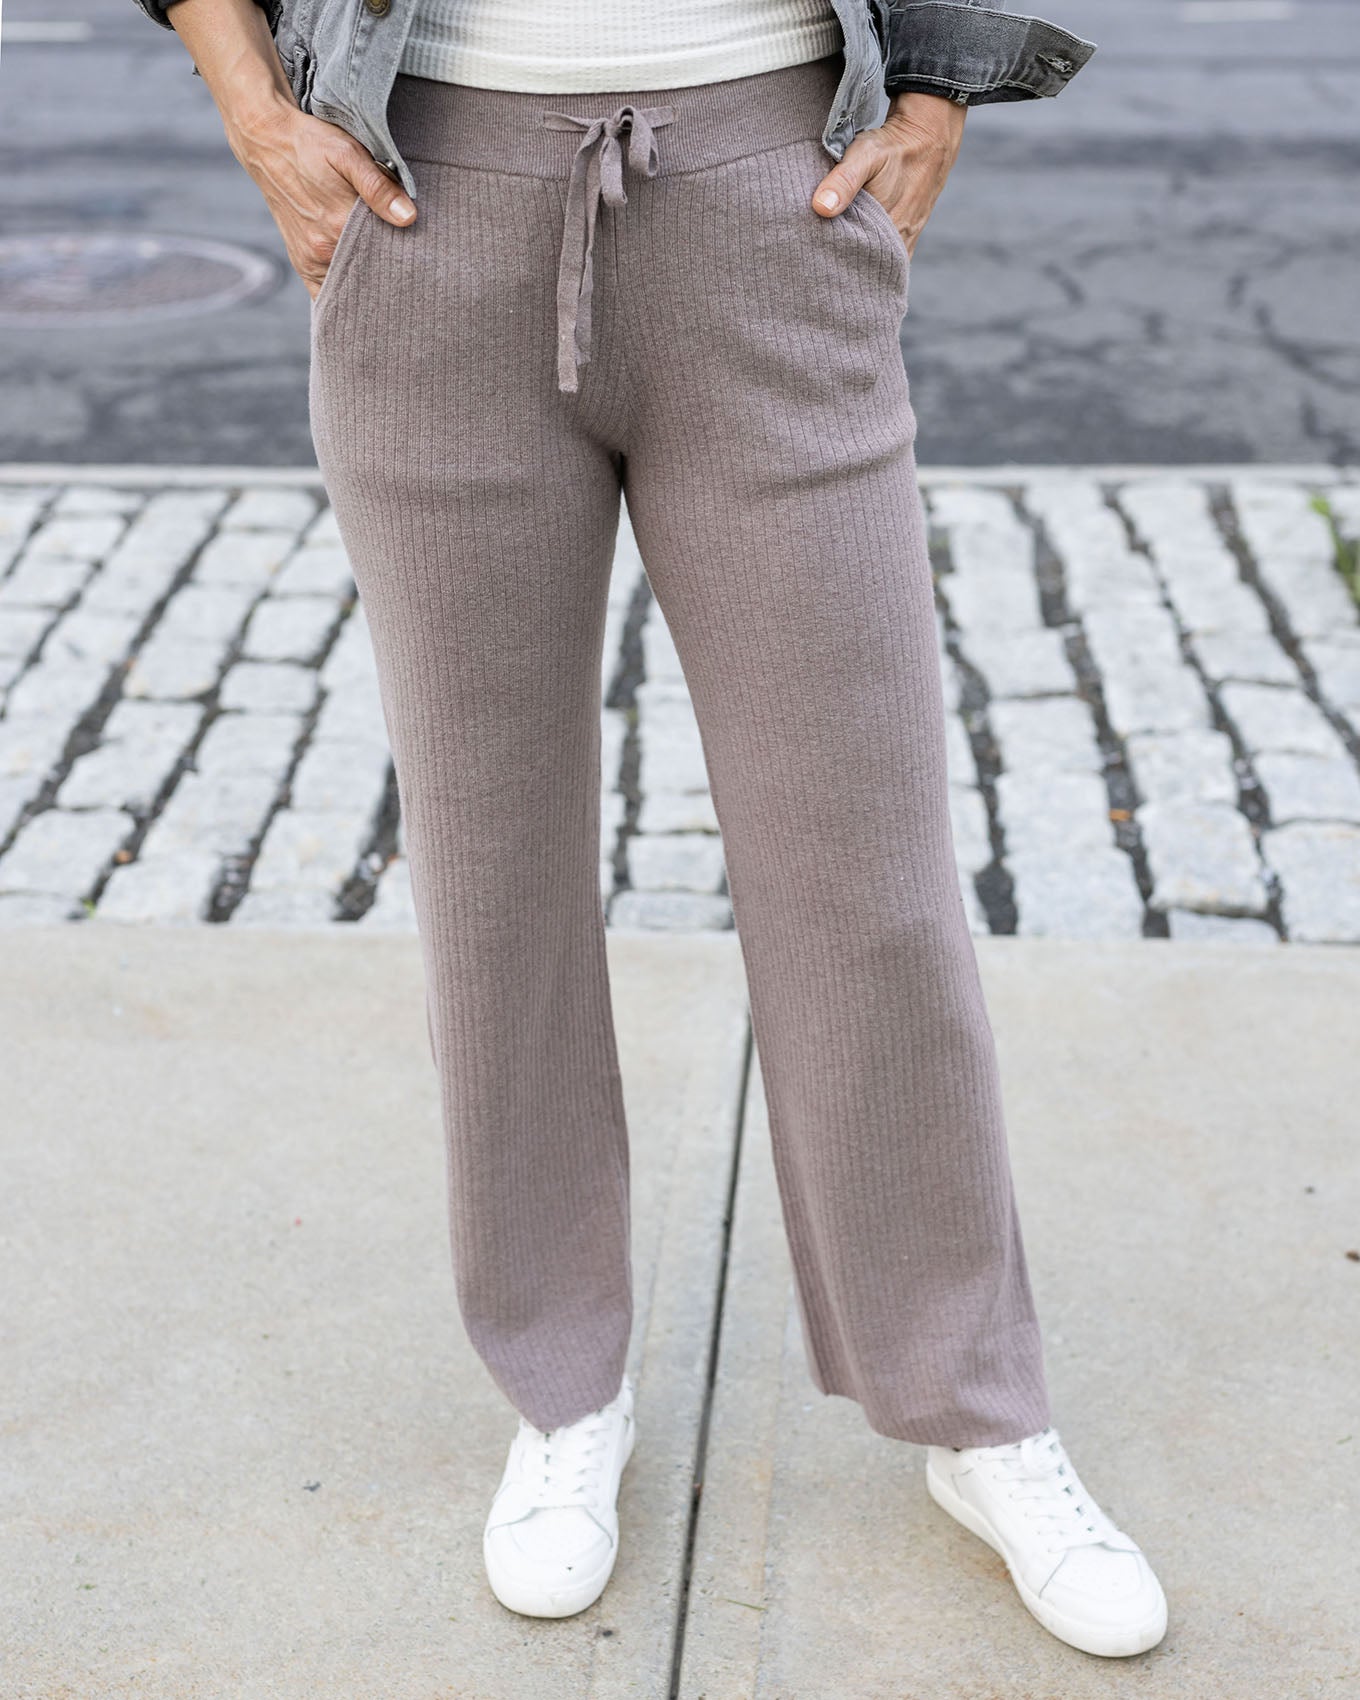 Classic & Cozy Almondine Ribbed Sweater Pants